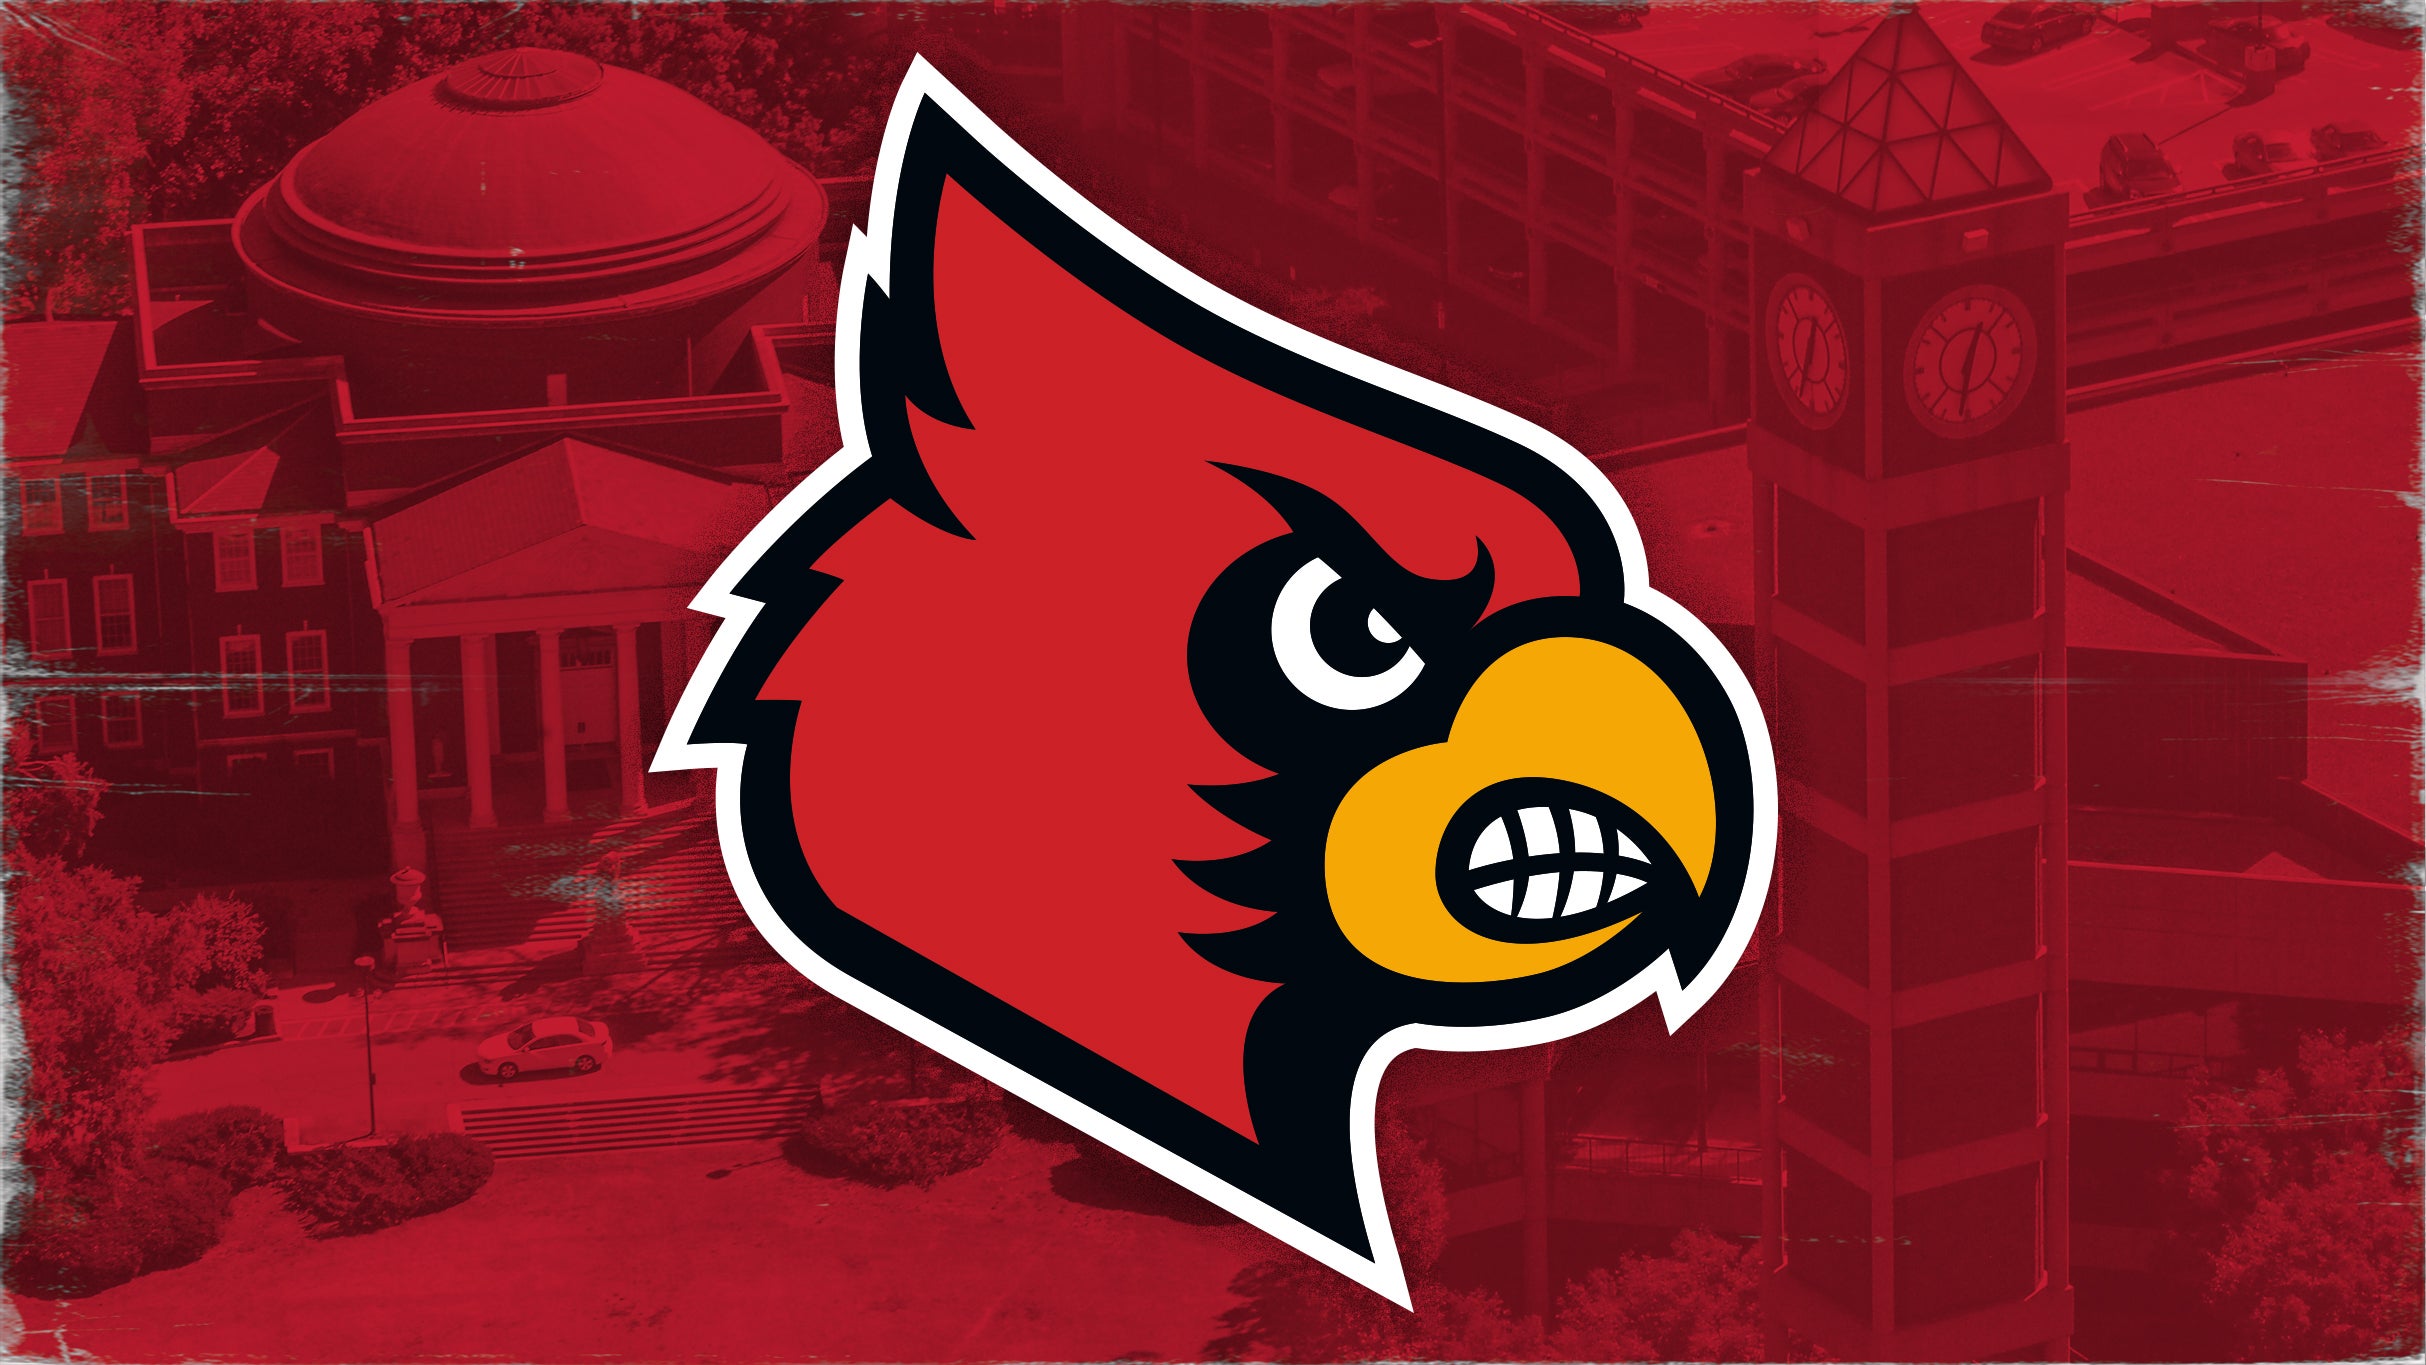 Louisville Cardinals Football vs. Austin Peay Governors Football